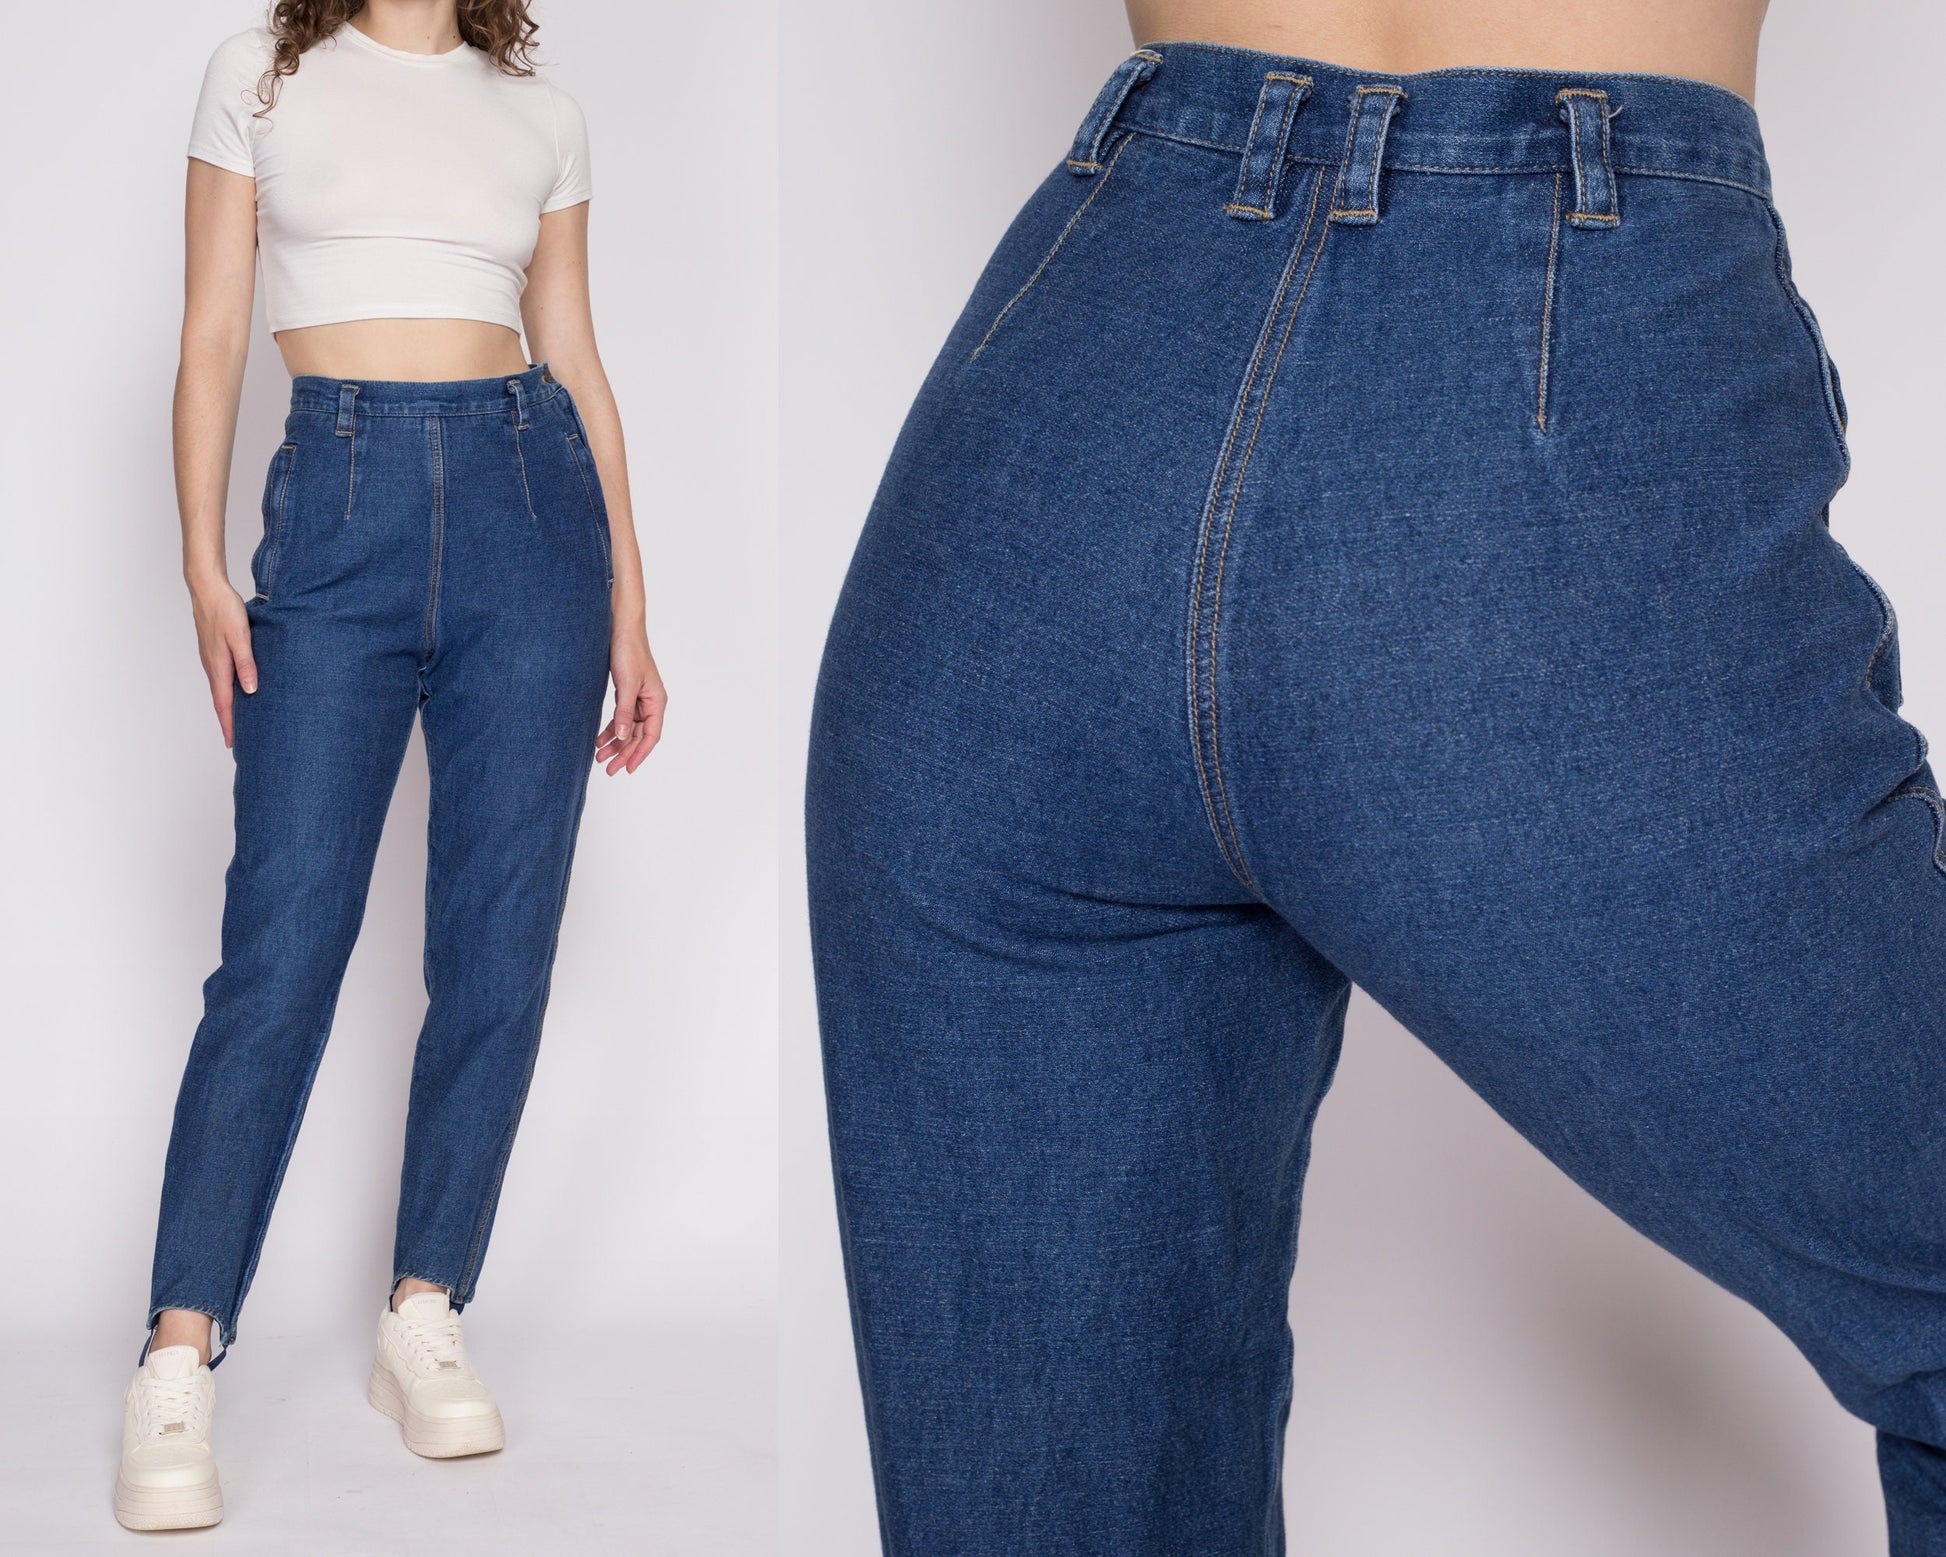 Hnewly Fashion Womens Pocket Short Jeans Buttons Hole Zipper High